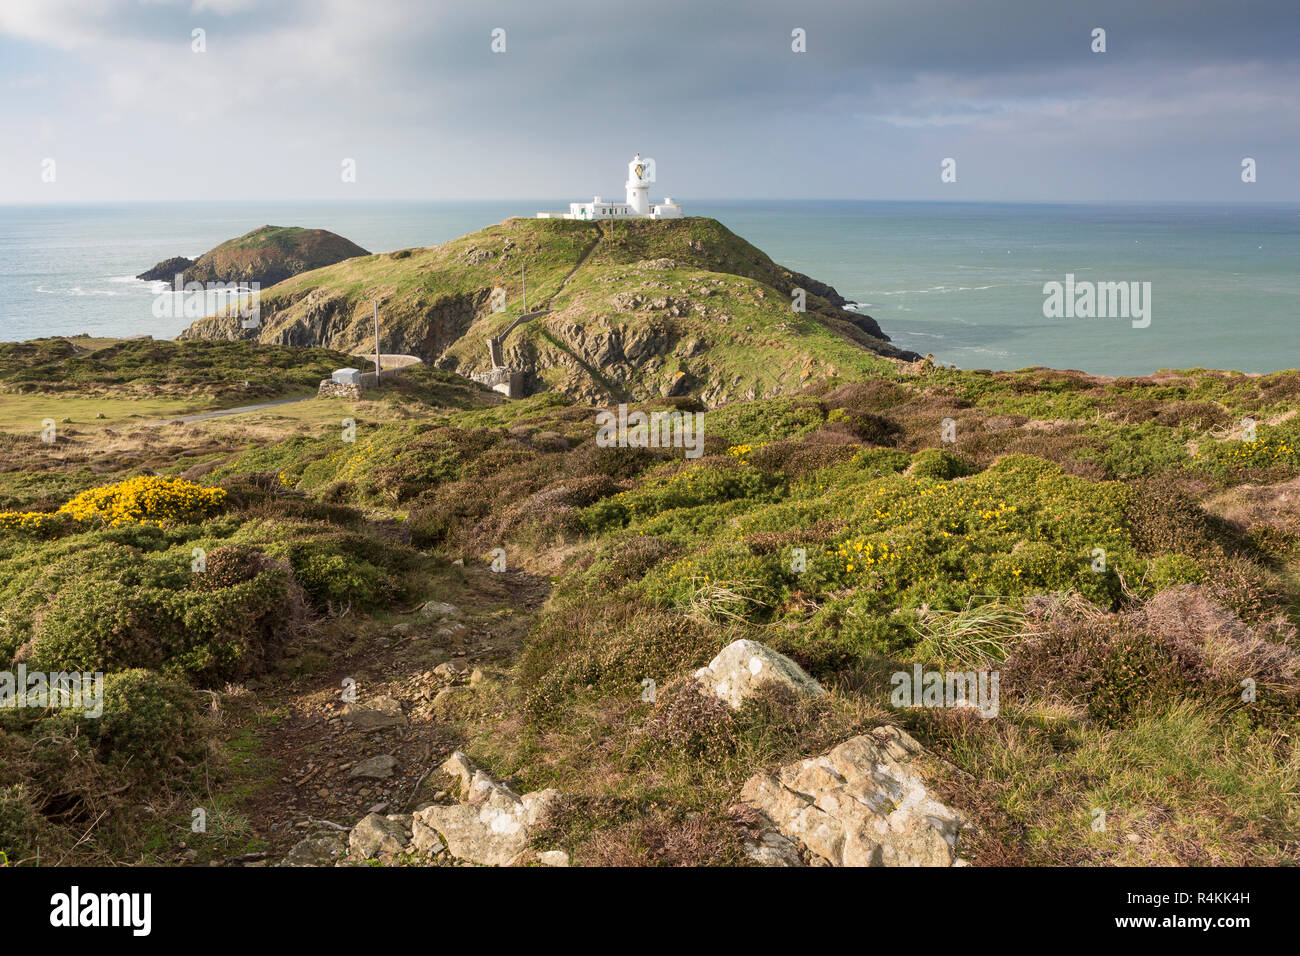 Strumble Head lighthouse on the rocky coast of Pembrokeshire, Wales with Irish Sea / Celtic Sea Stock Photo